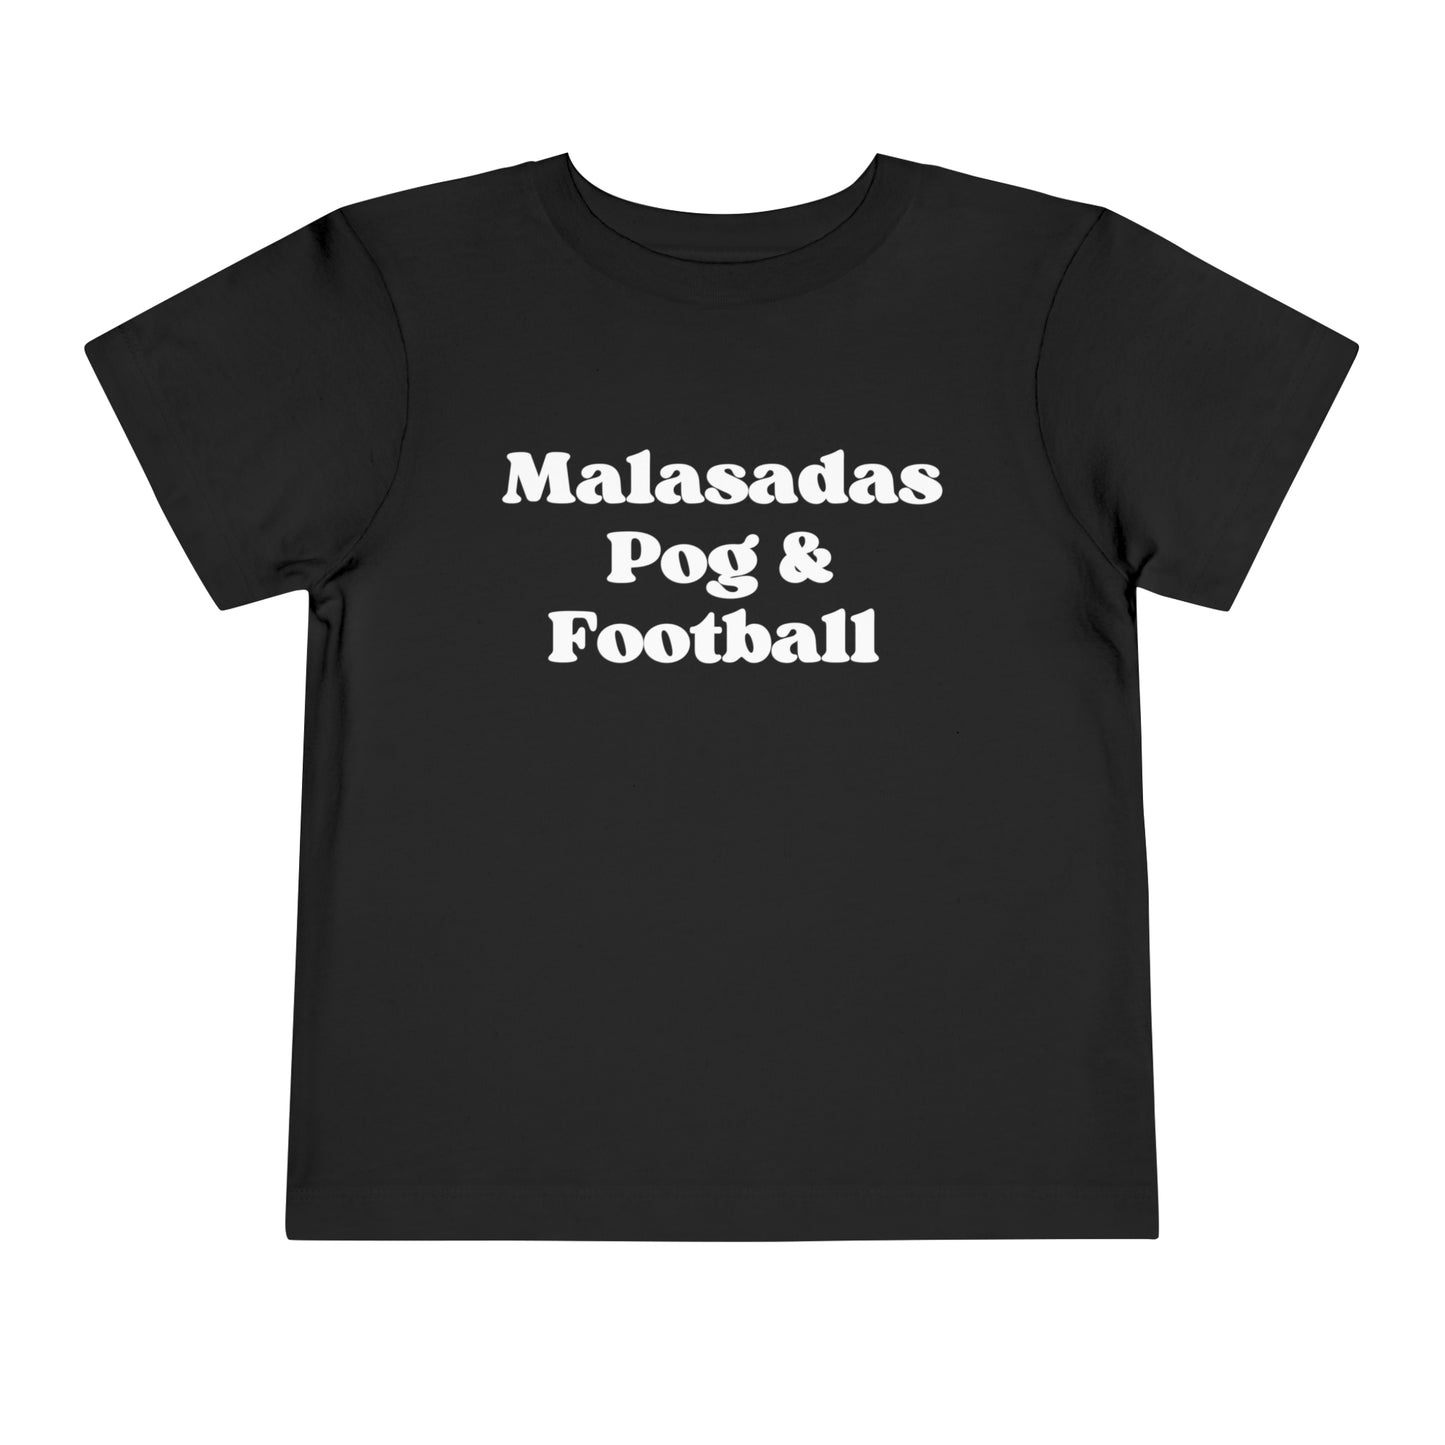 Toddler Malasadas Pog & Football